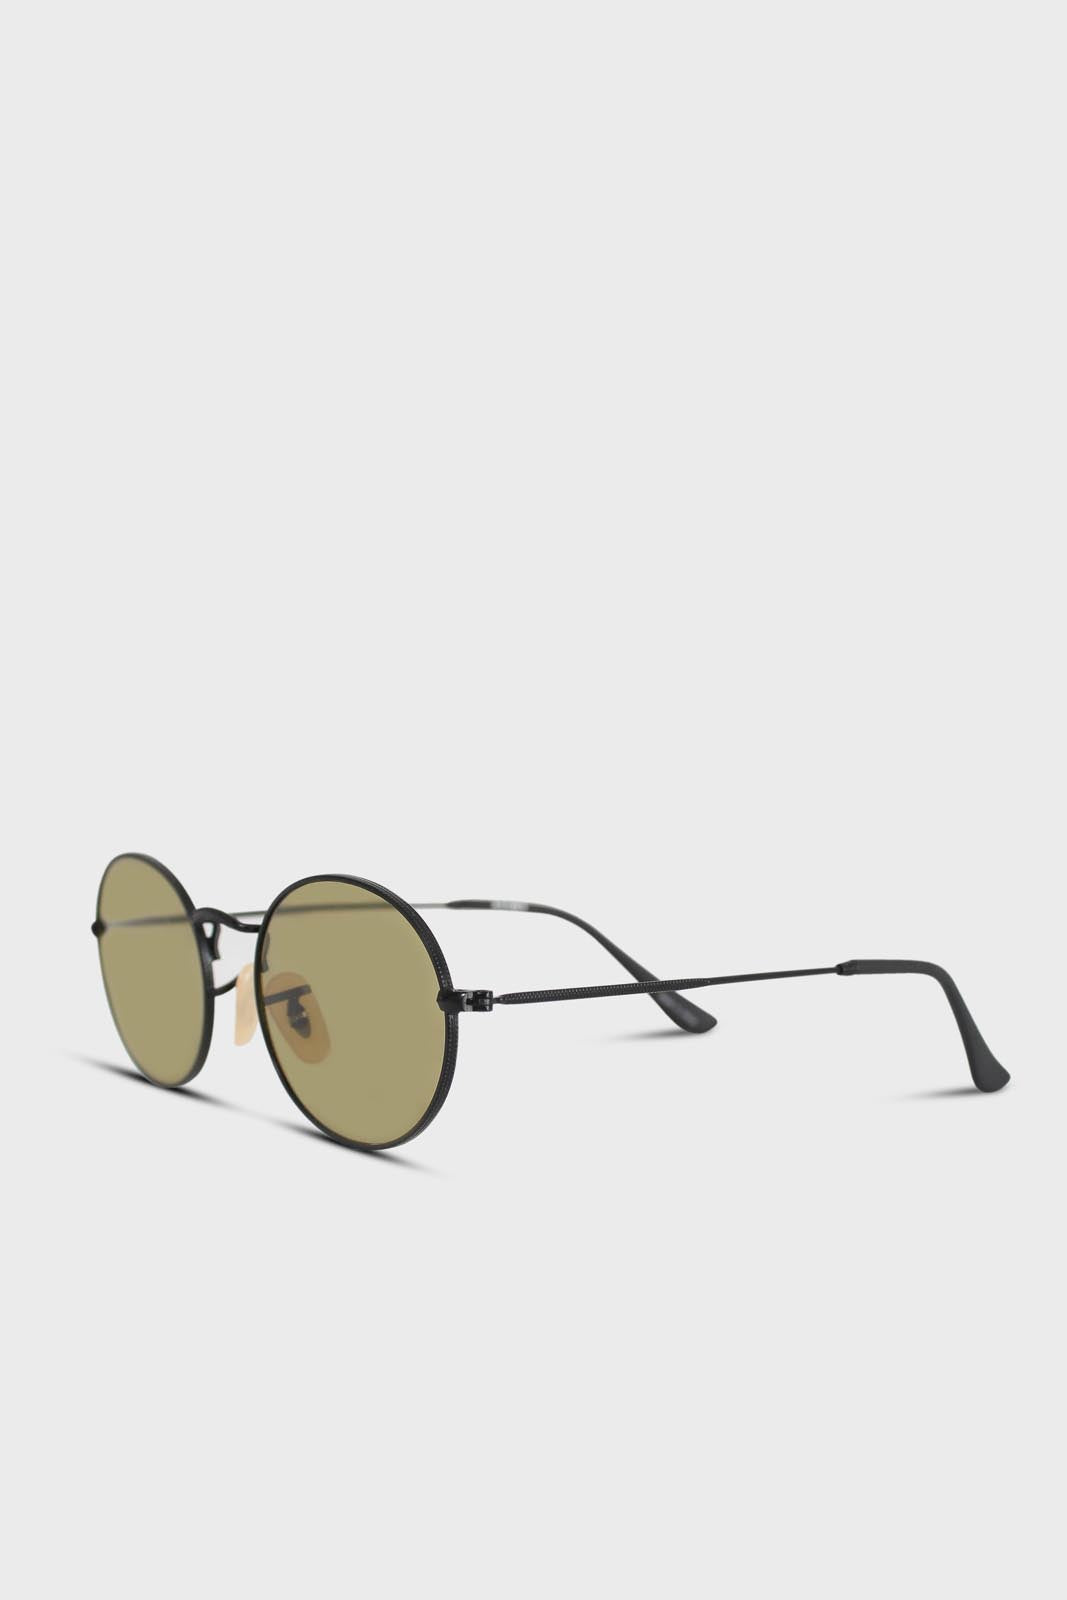 Smoked black frame small oval lens sunglasses